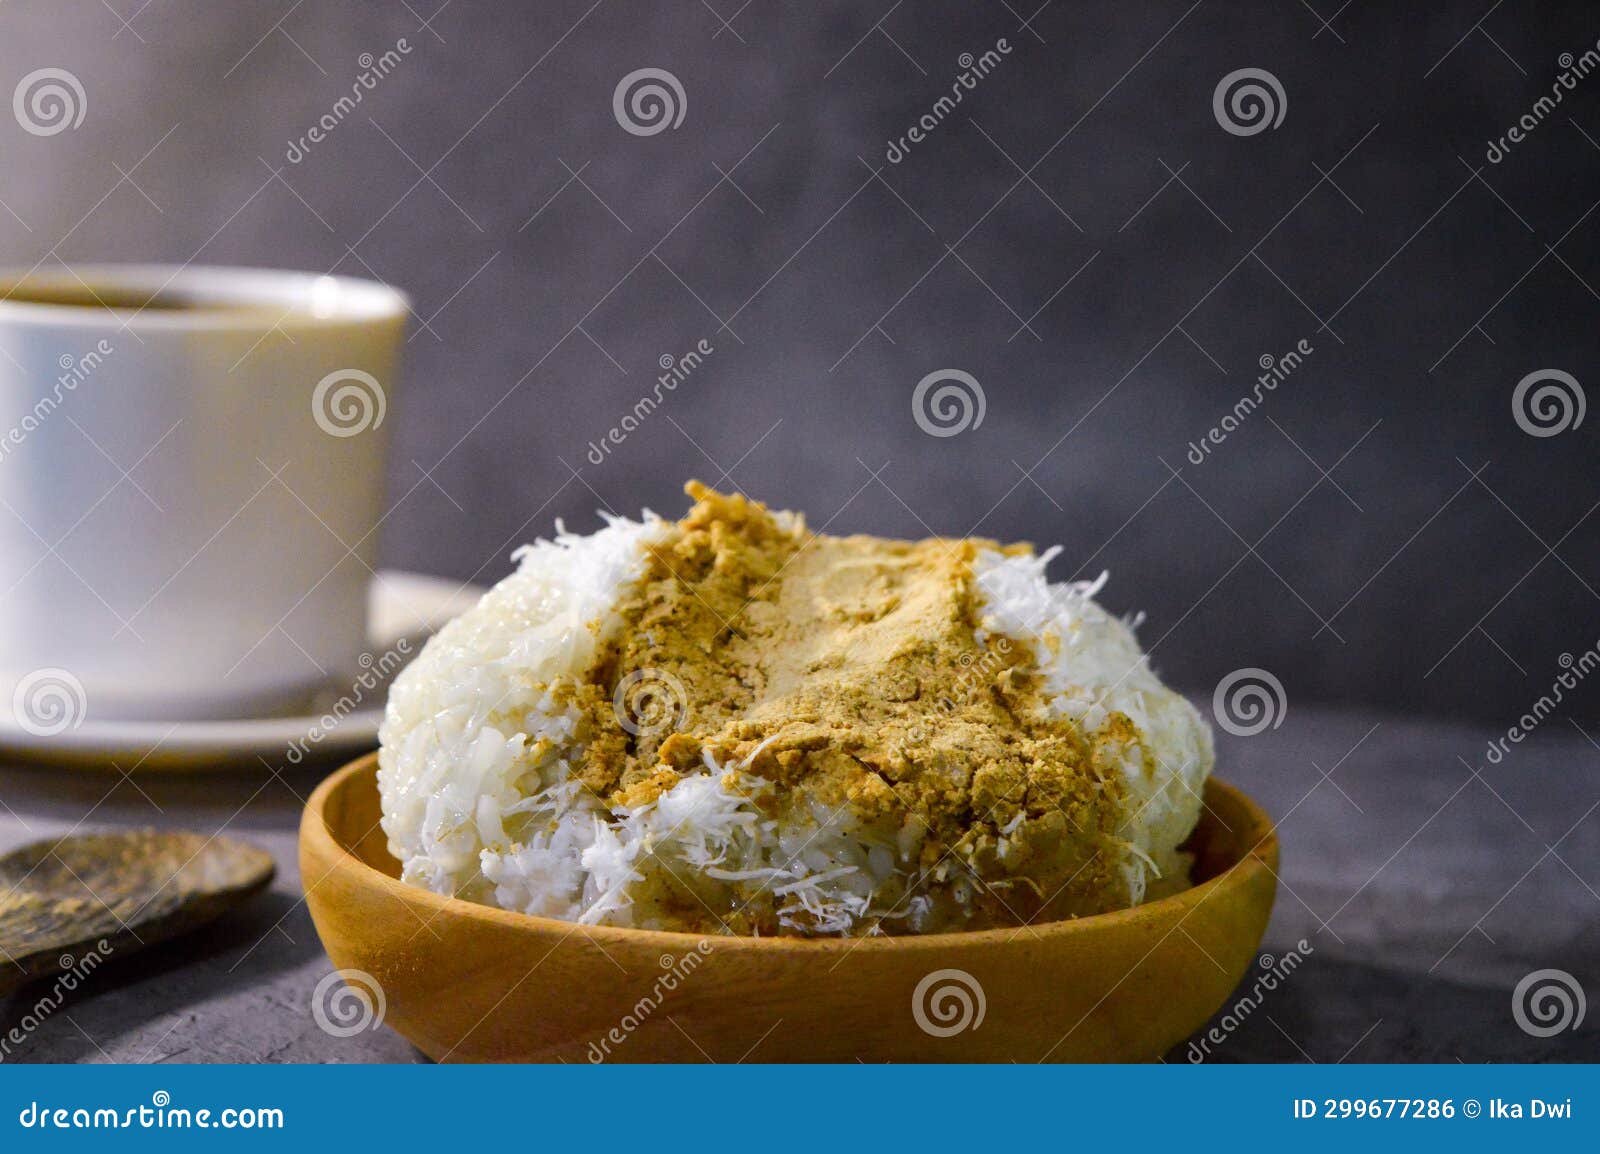 ketan bubuk or powdered sticky rice traditional food